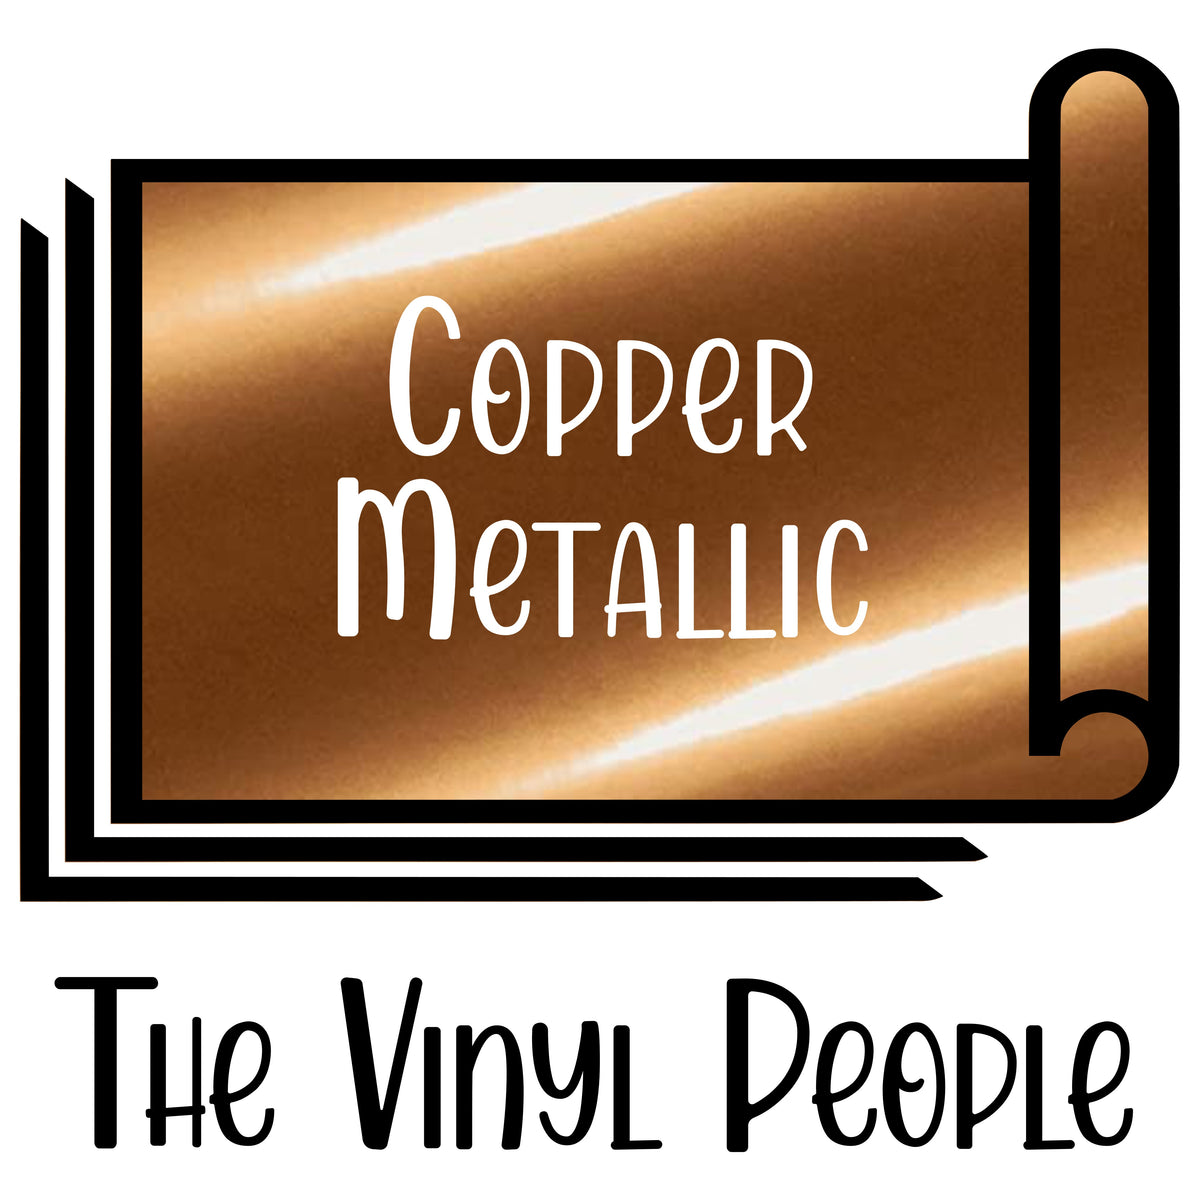 Oracal 651 Copper Adhesive Vinyl